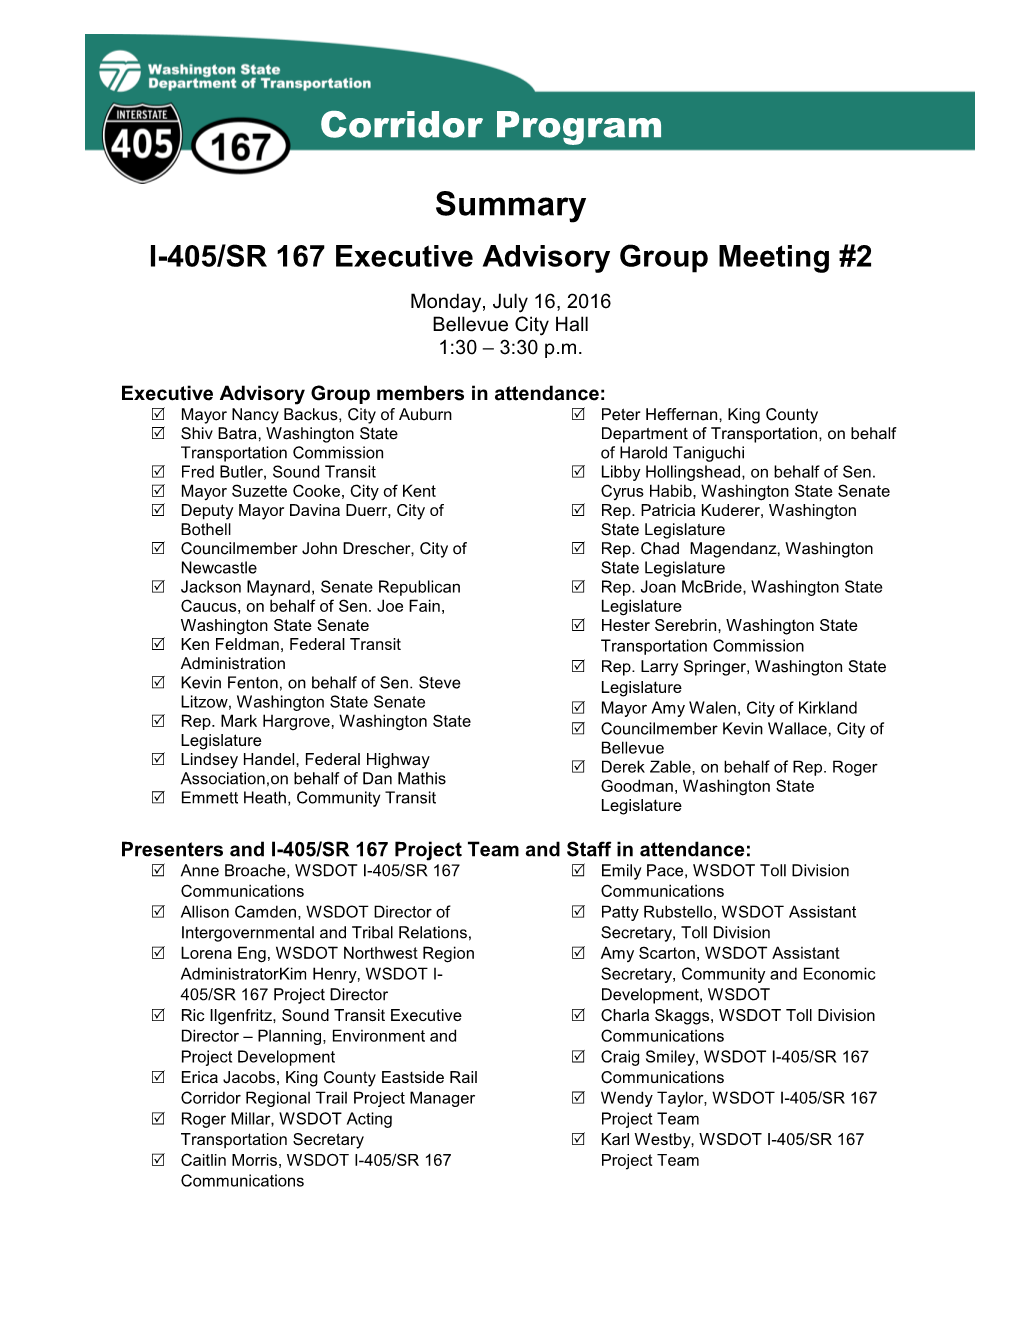 I-405 Executive Advisory Group Meeting Summary